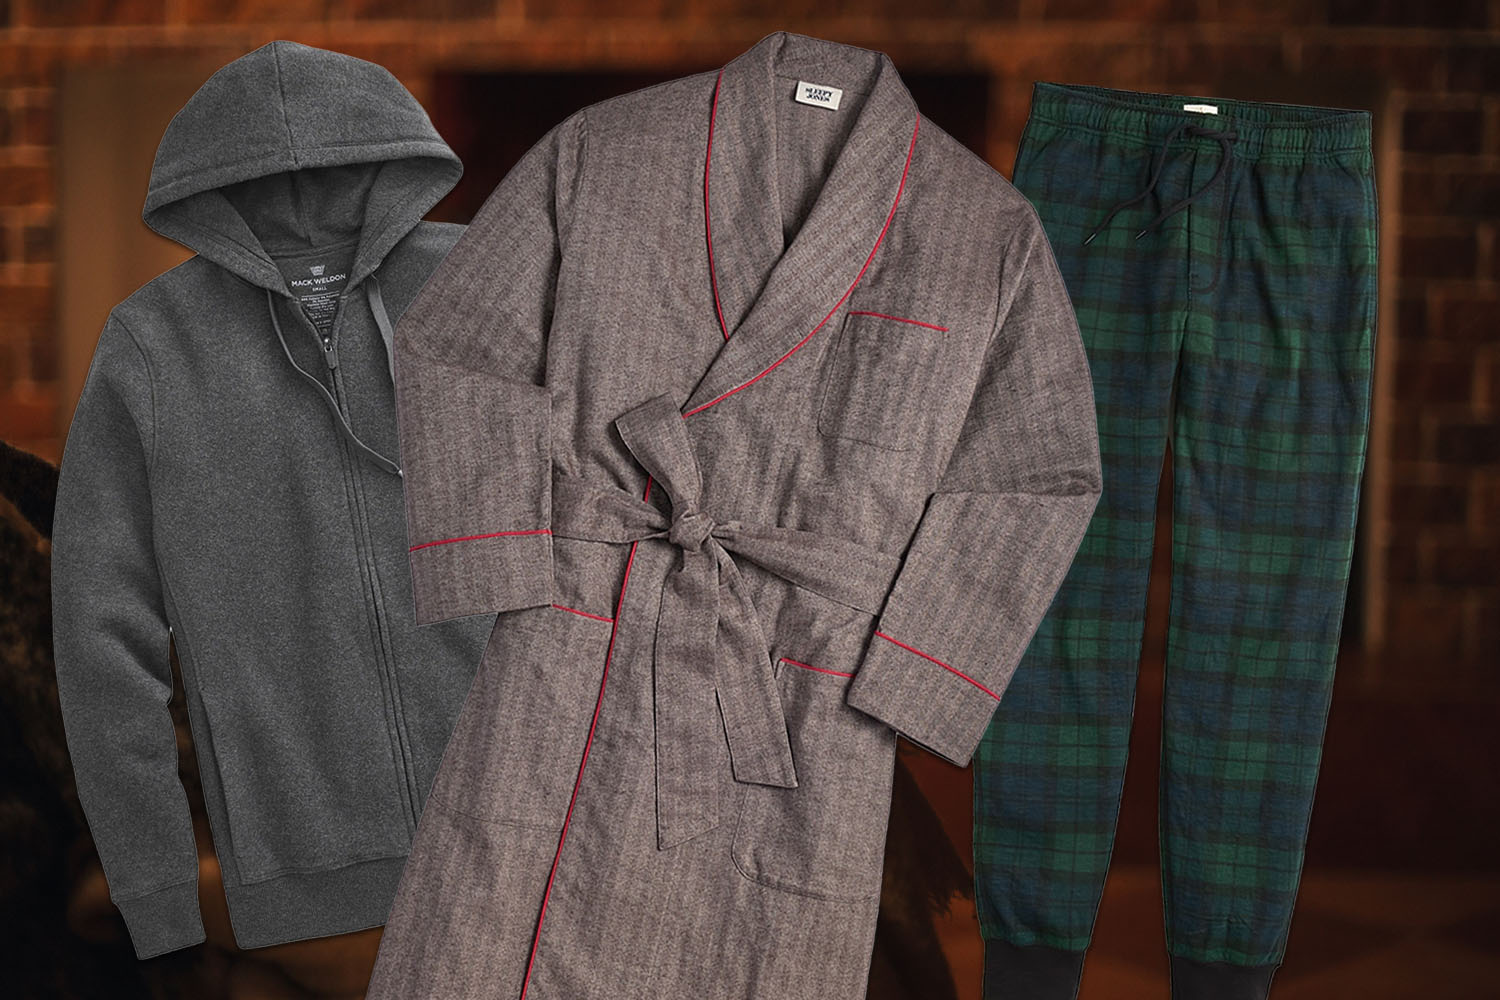 Men's Soft Cotton Knit Jersey Pajamas Lounge Set, Long Sleeve